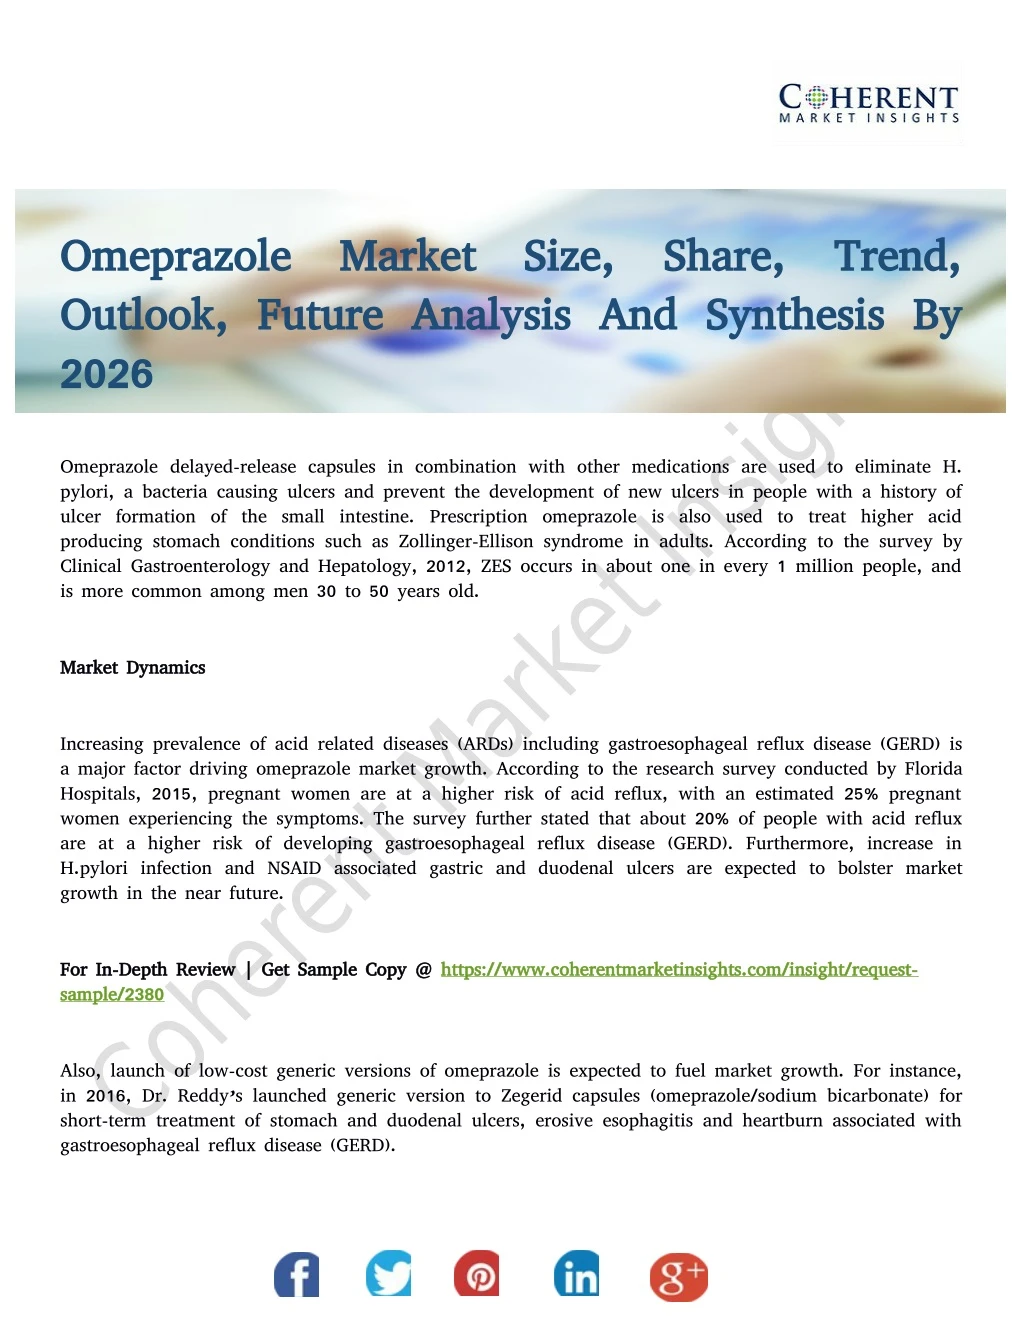 omeprazole omeprazole market size share trend